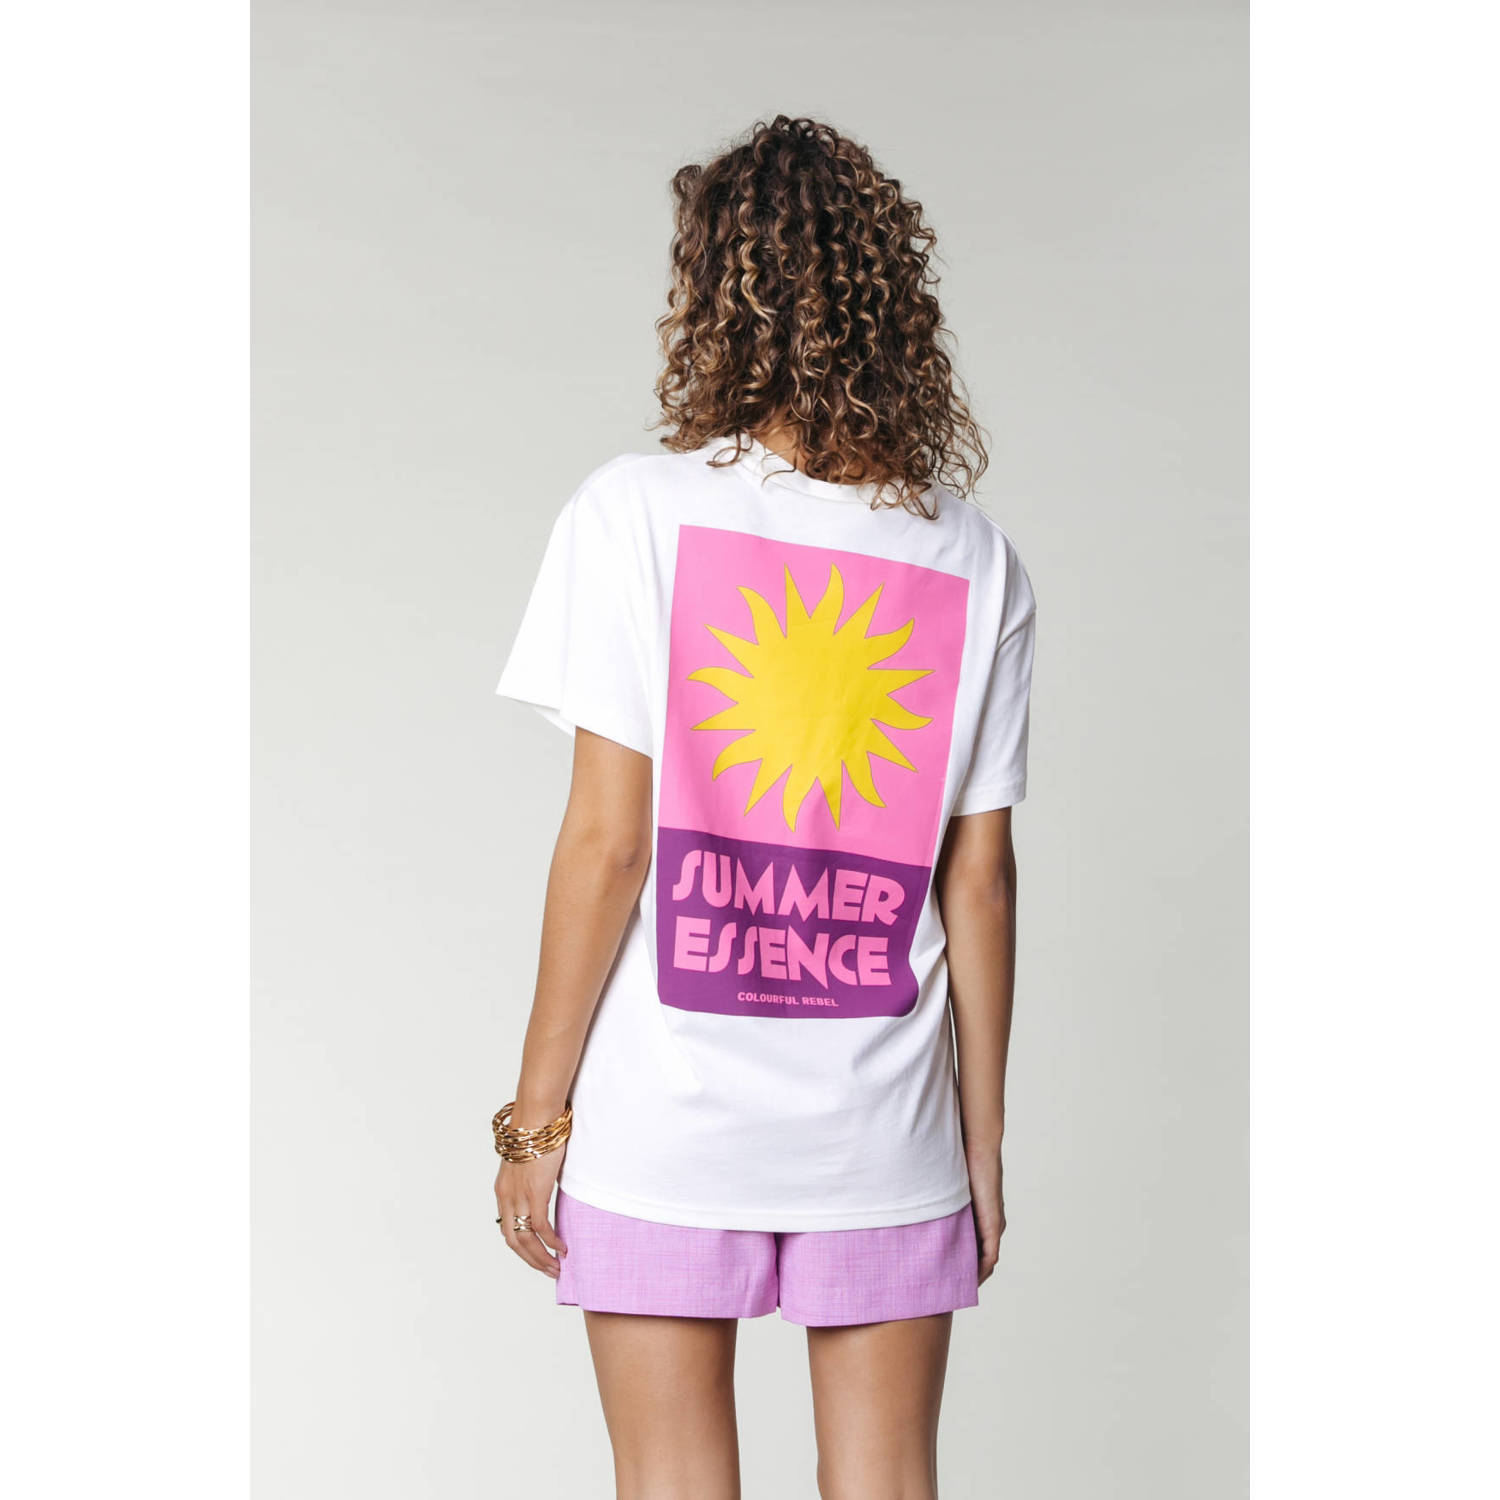 Colourful Rebel T-shirt met backprint wit roze